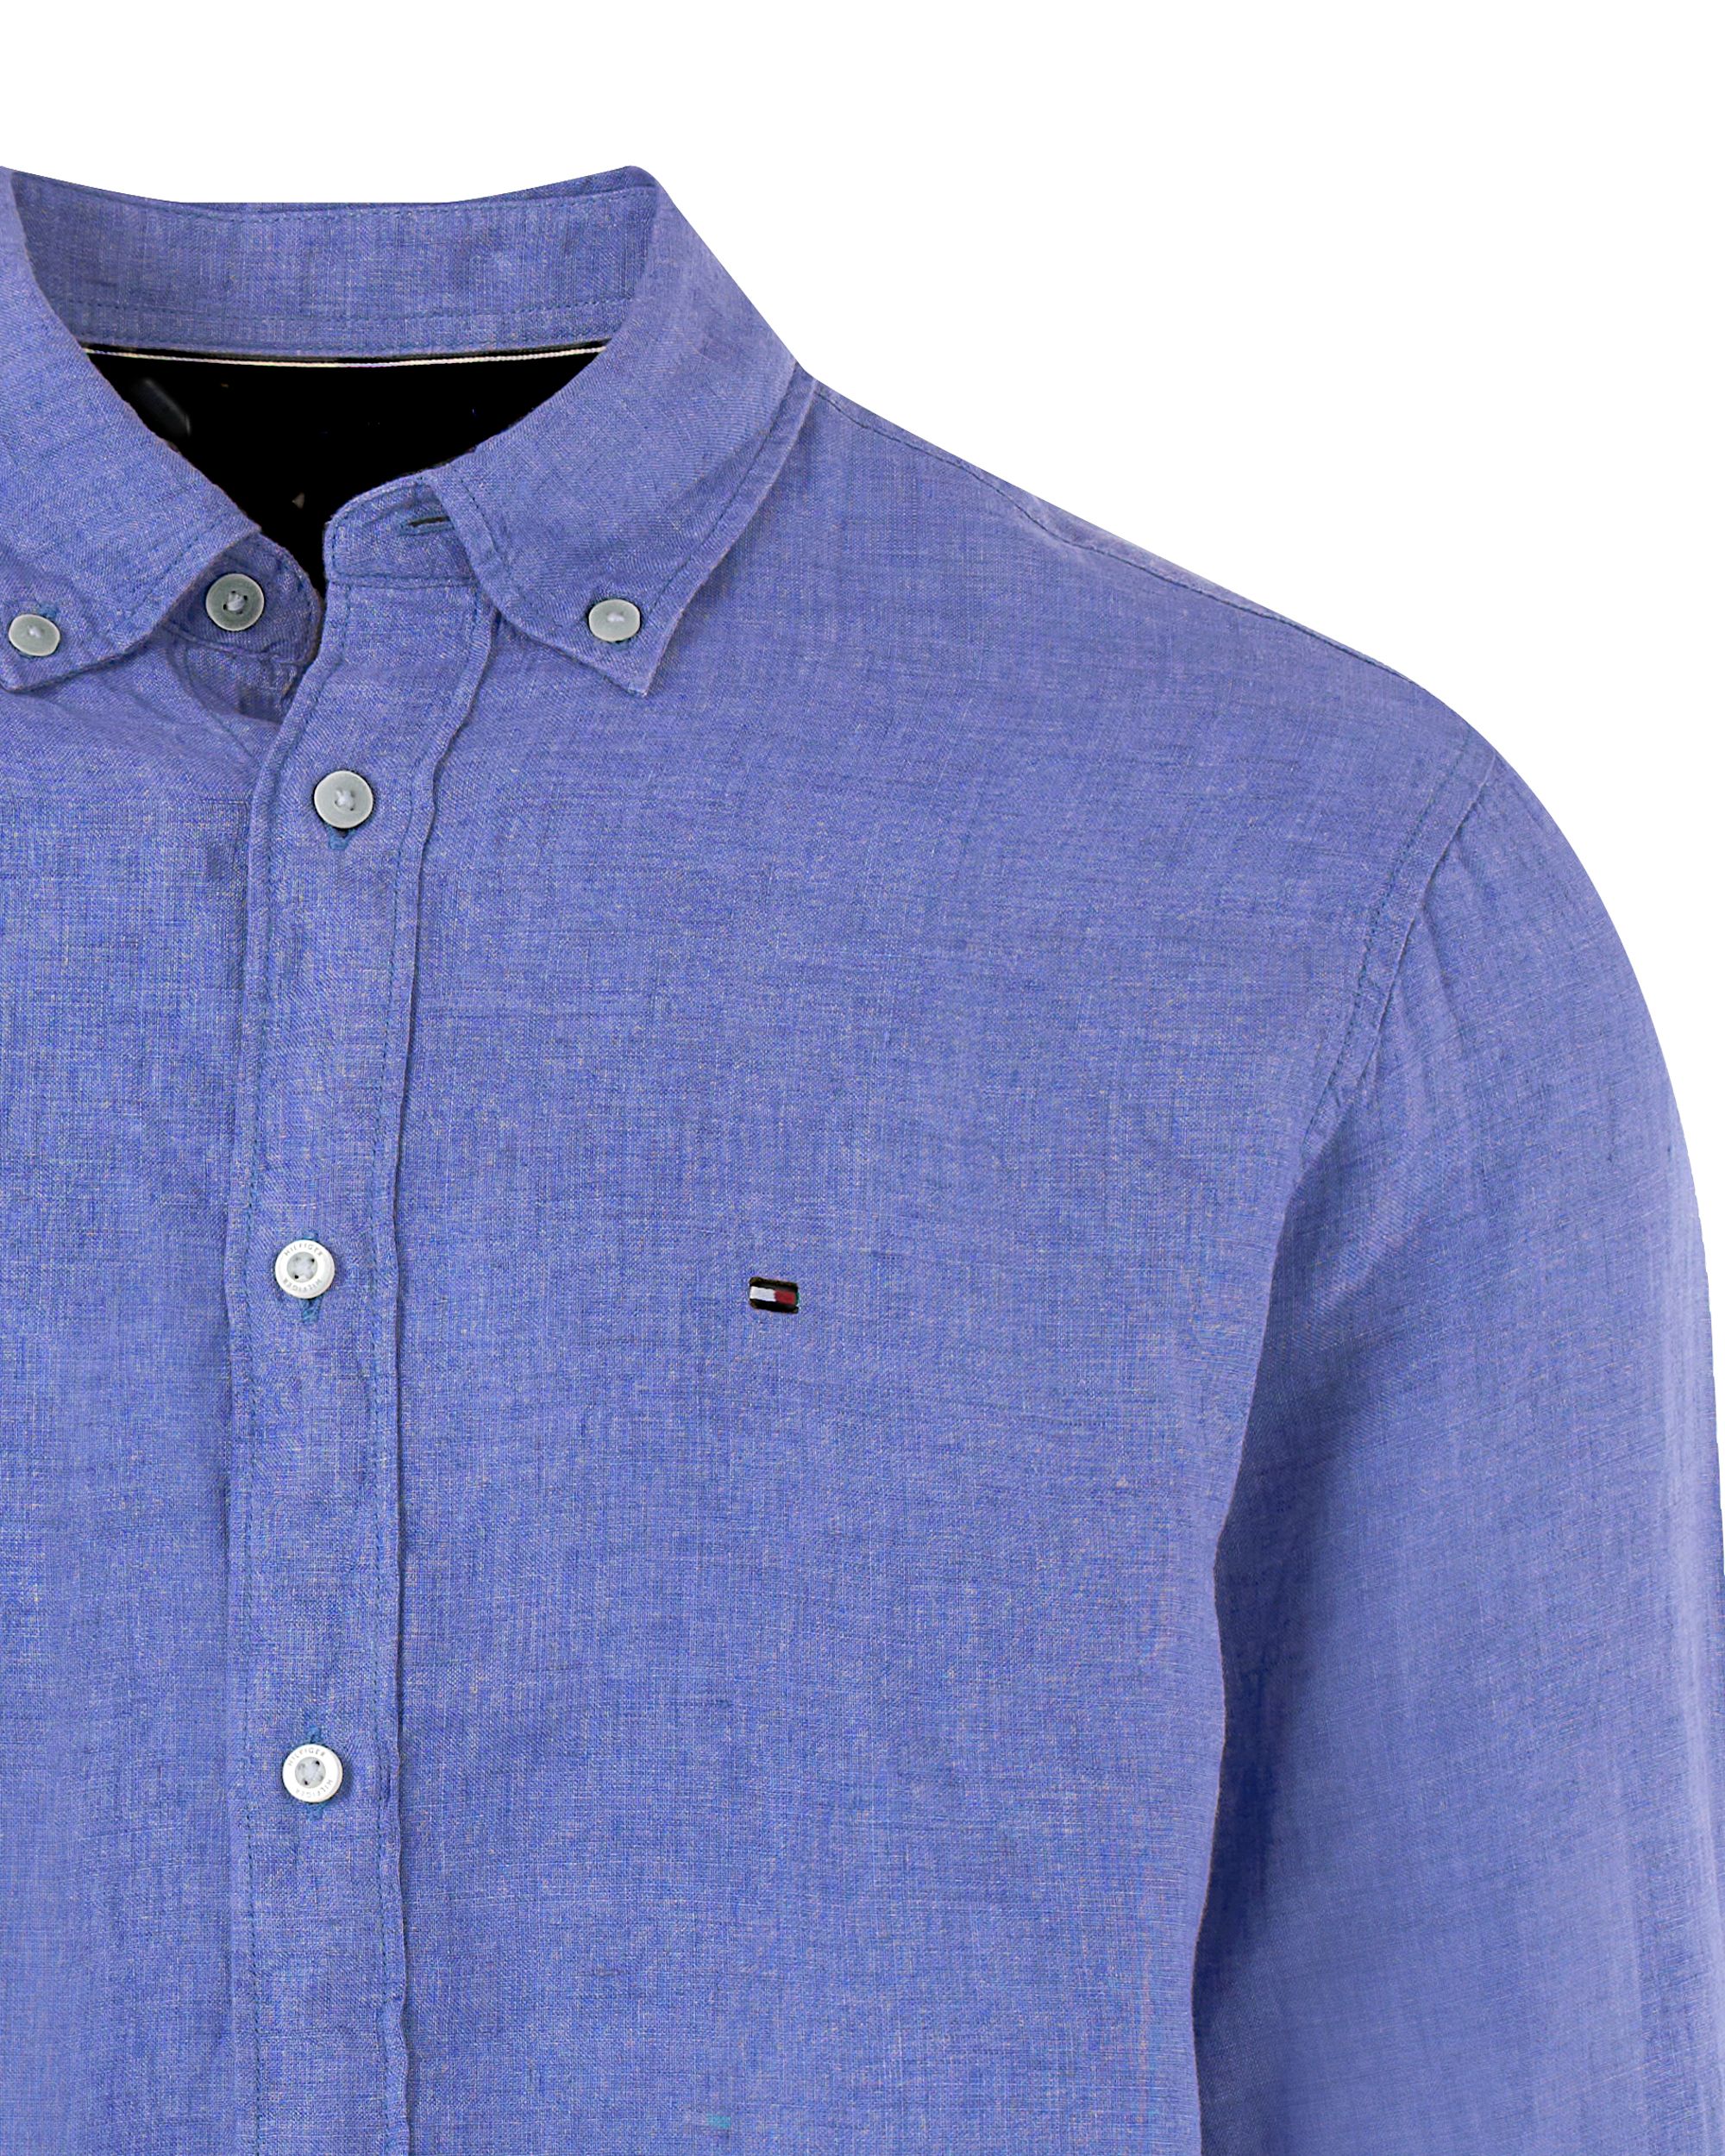 Tommy Hilfiger Menswear Casual Overhemd LM Blauw 094645-001-L